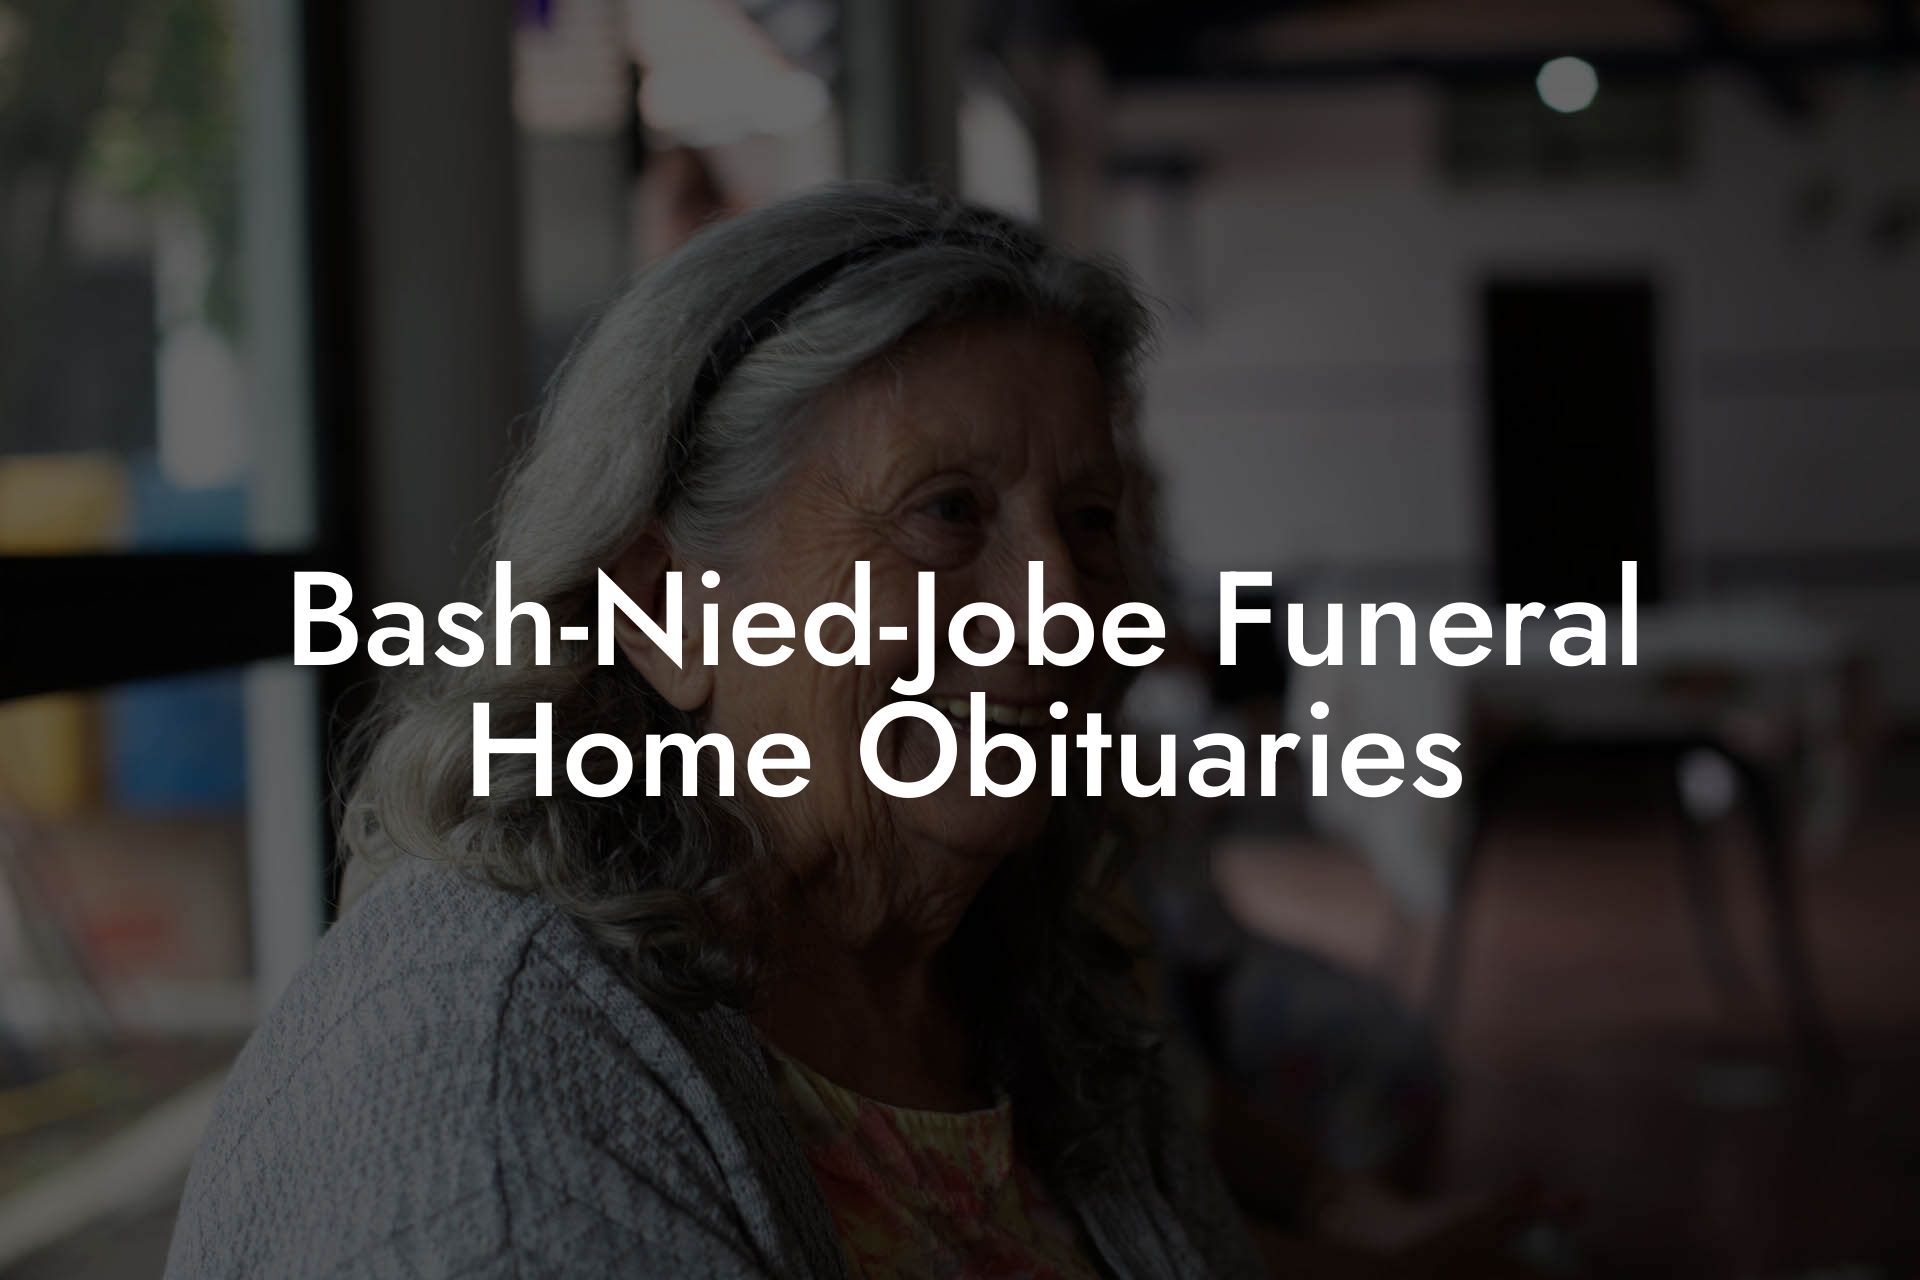 Bash-Nied-Jobe Funeral Home Obituaries